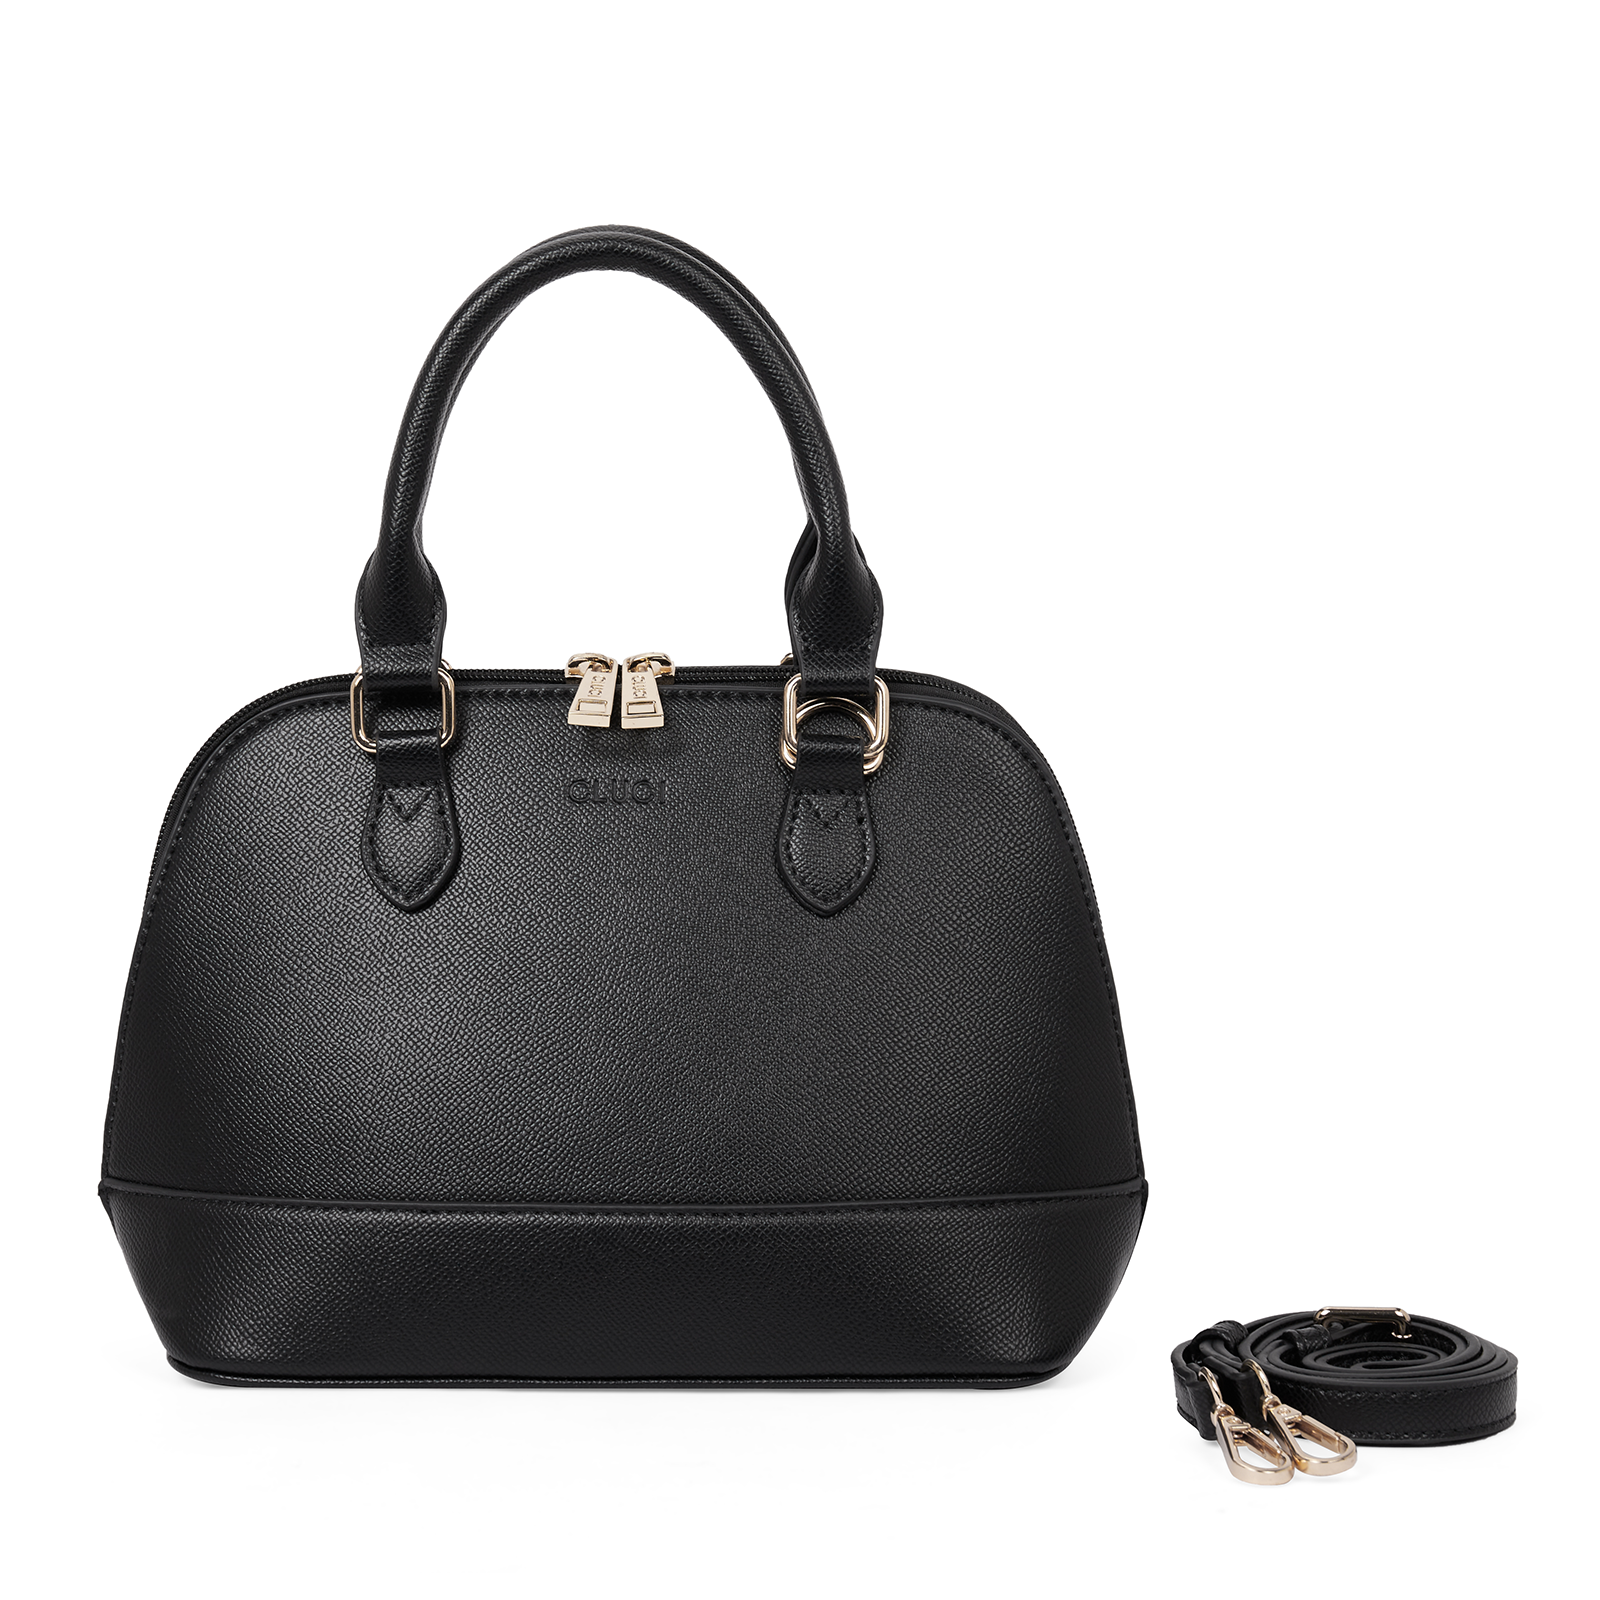 Small Purses for Women Satchel Crossbody Bags Vegan Leather handbags